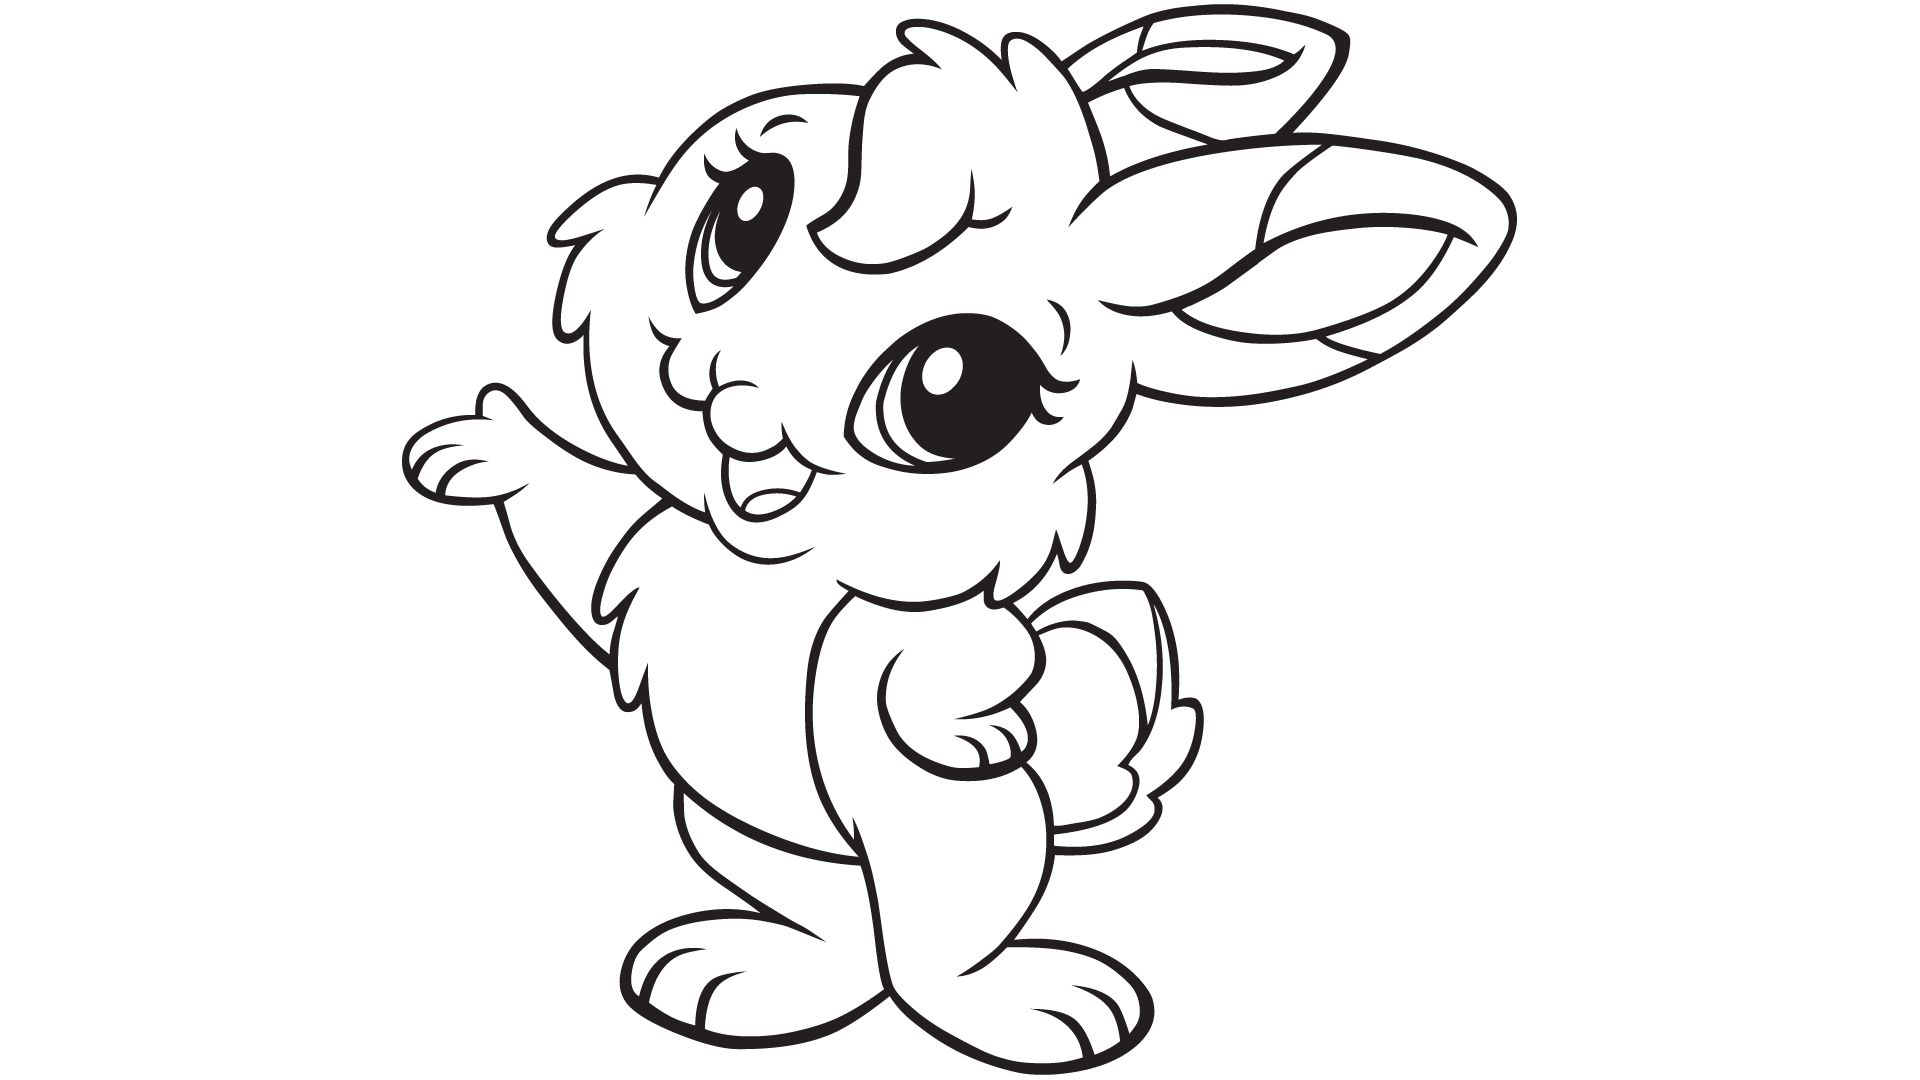 Bunny rabbit coloring page